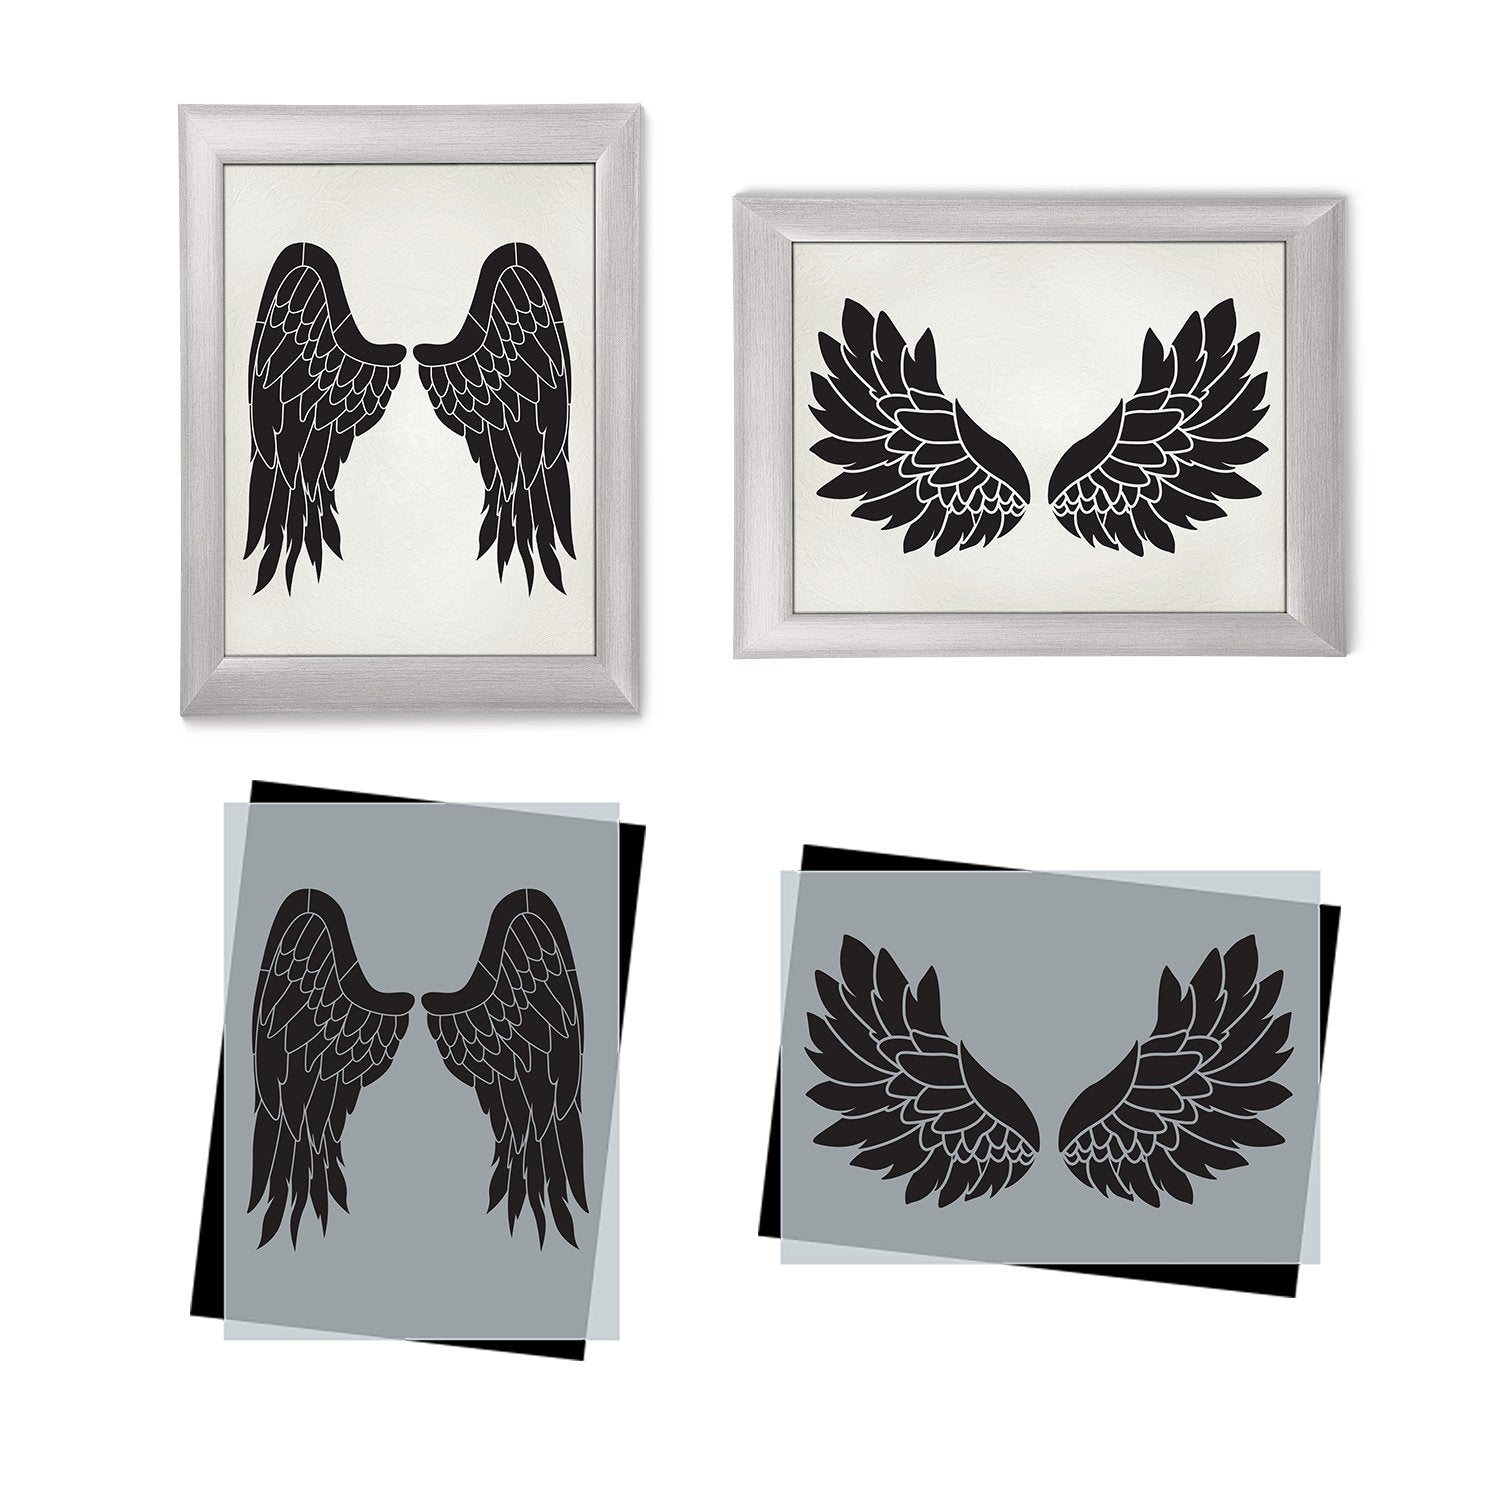 DIY reusable angel wings sign stencils, angel wings silhouette stencils, wings template